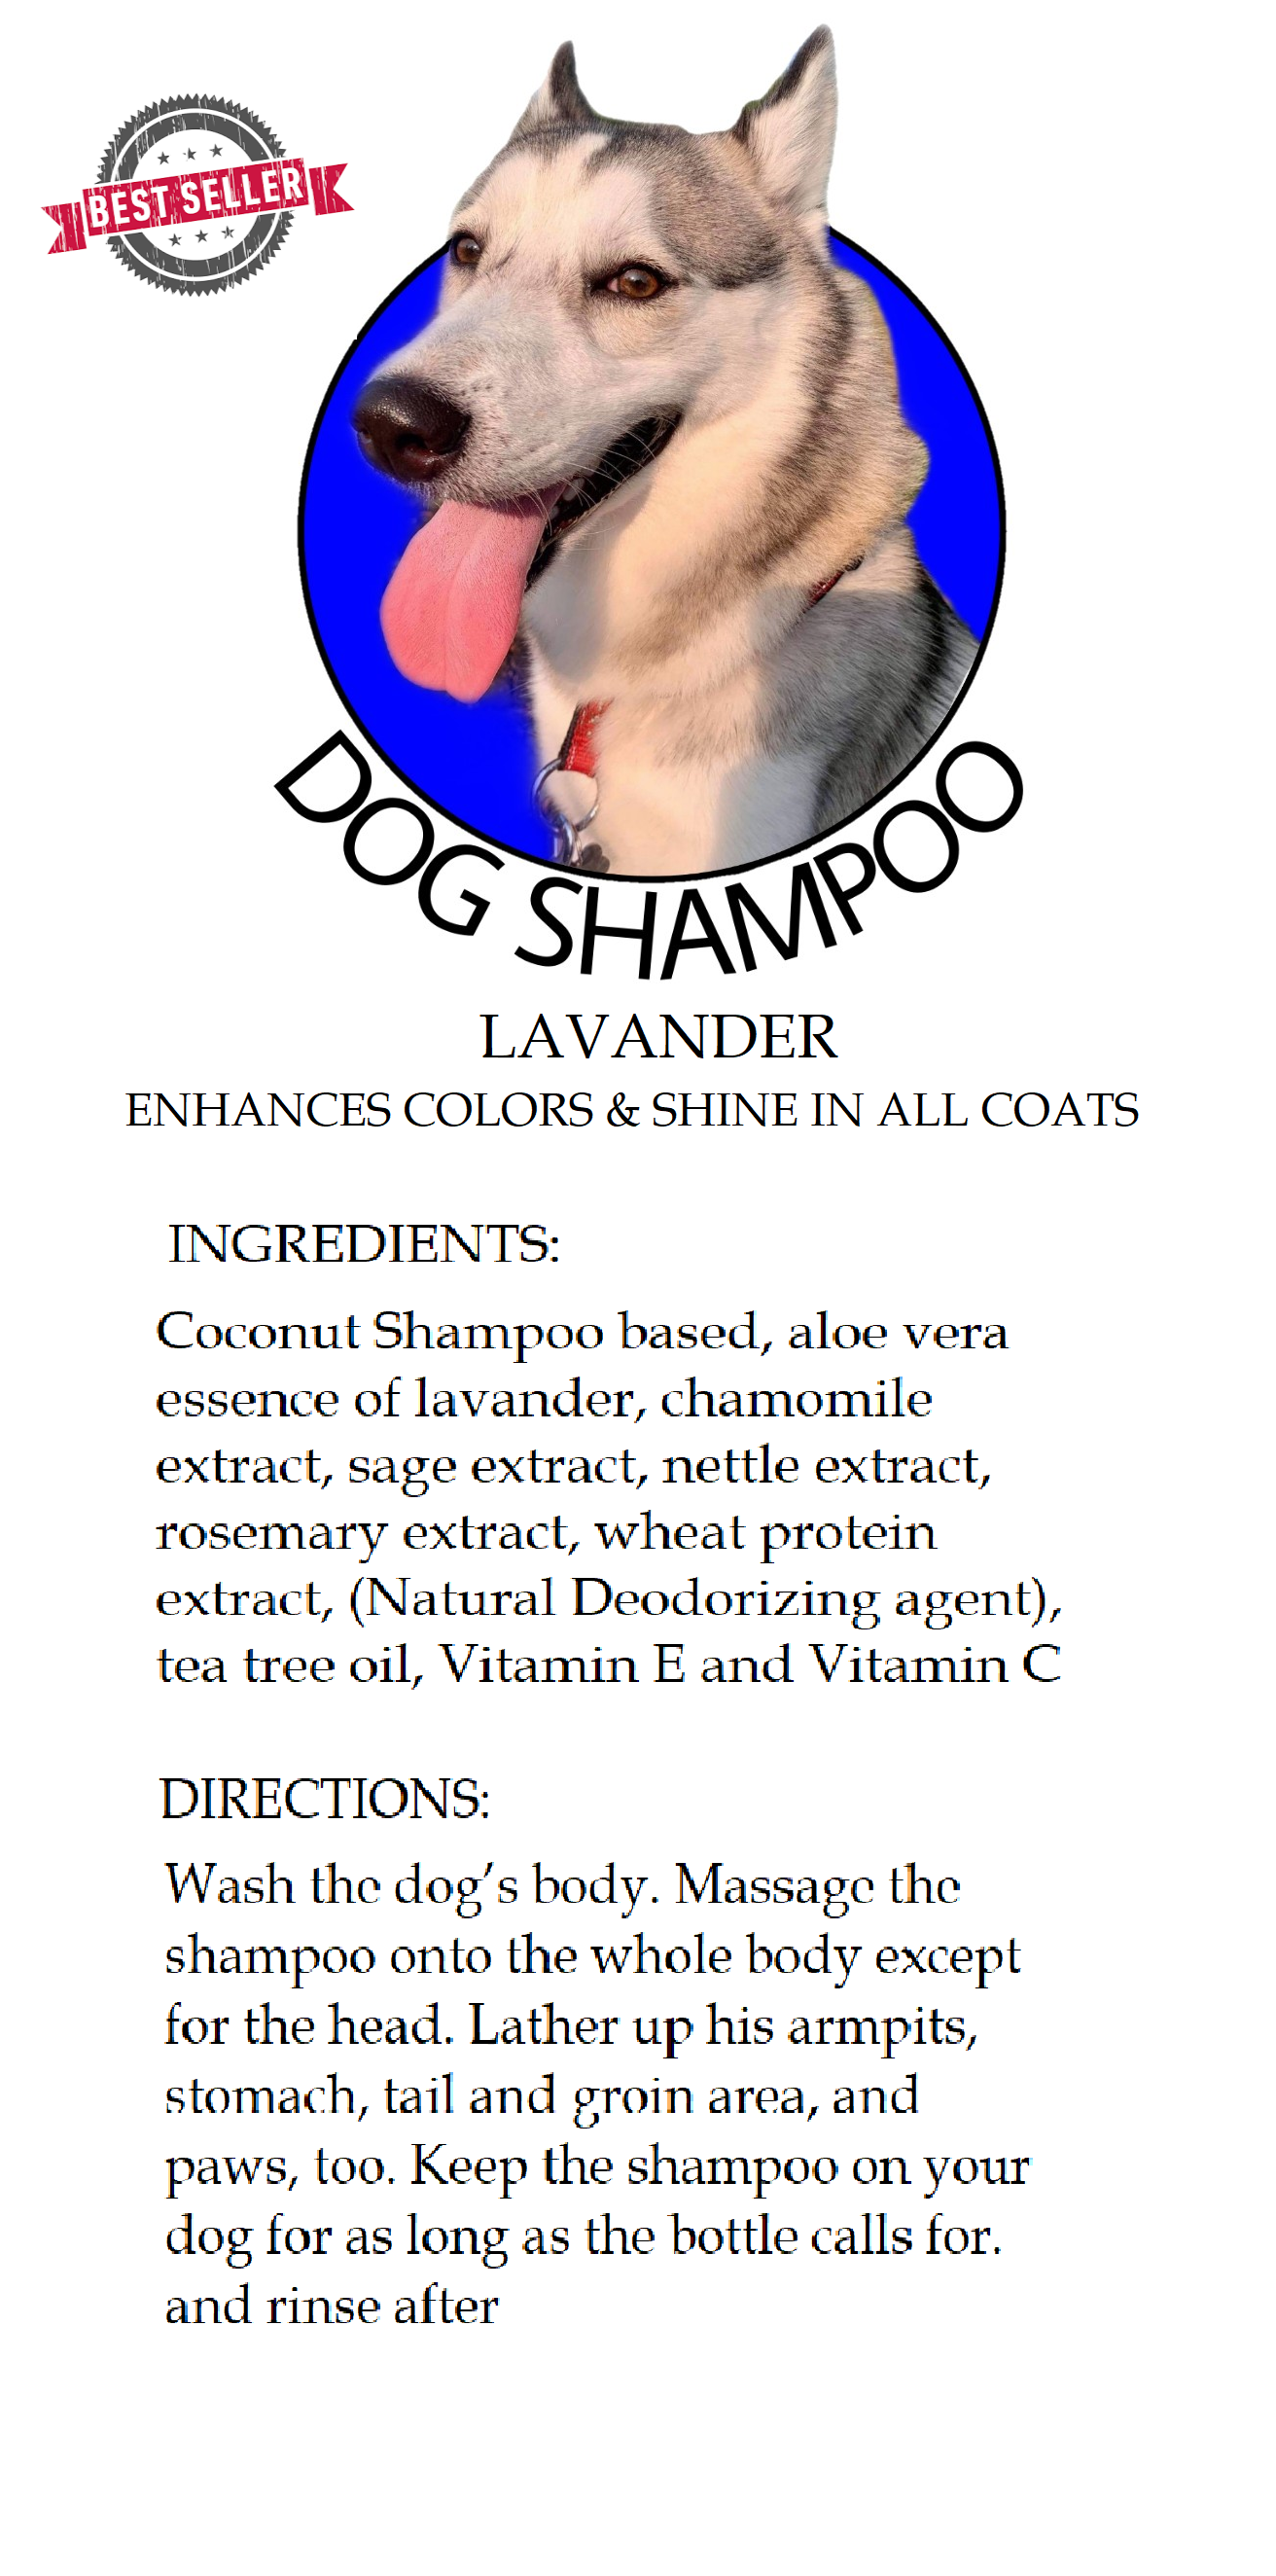 superfine dog shampoo